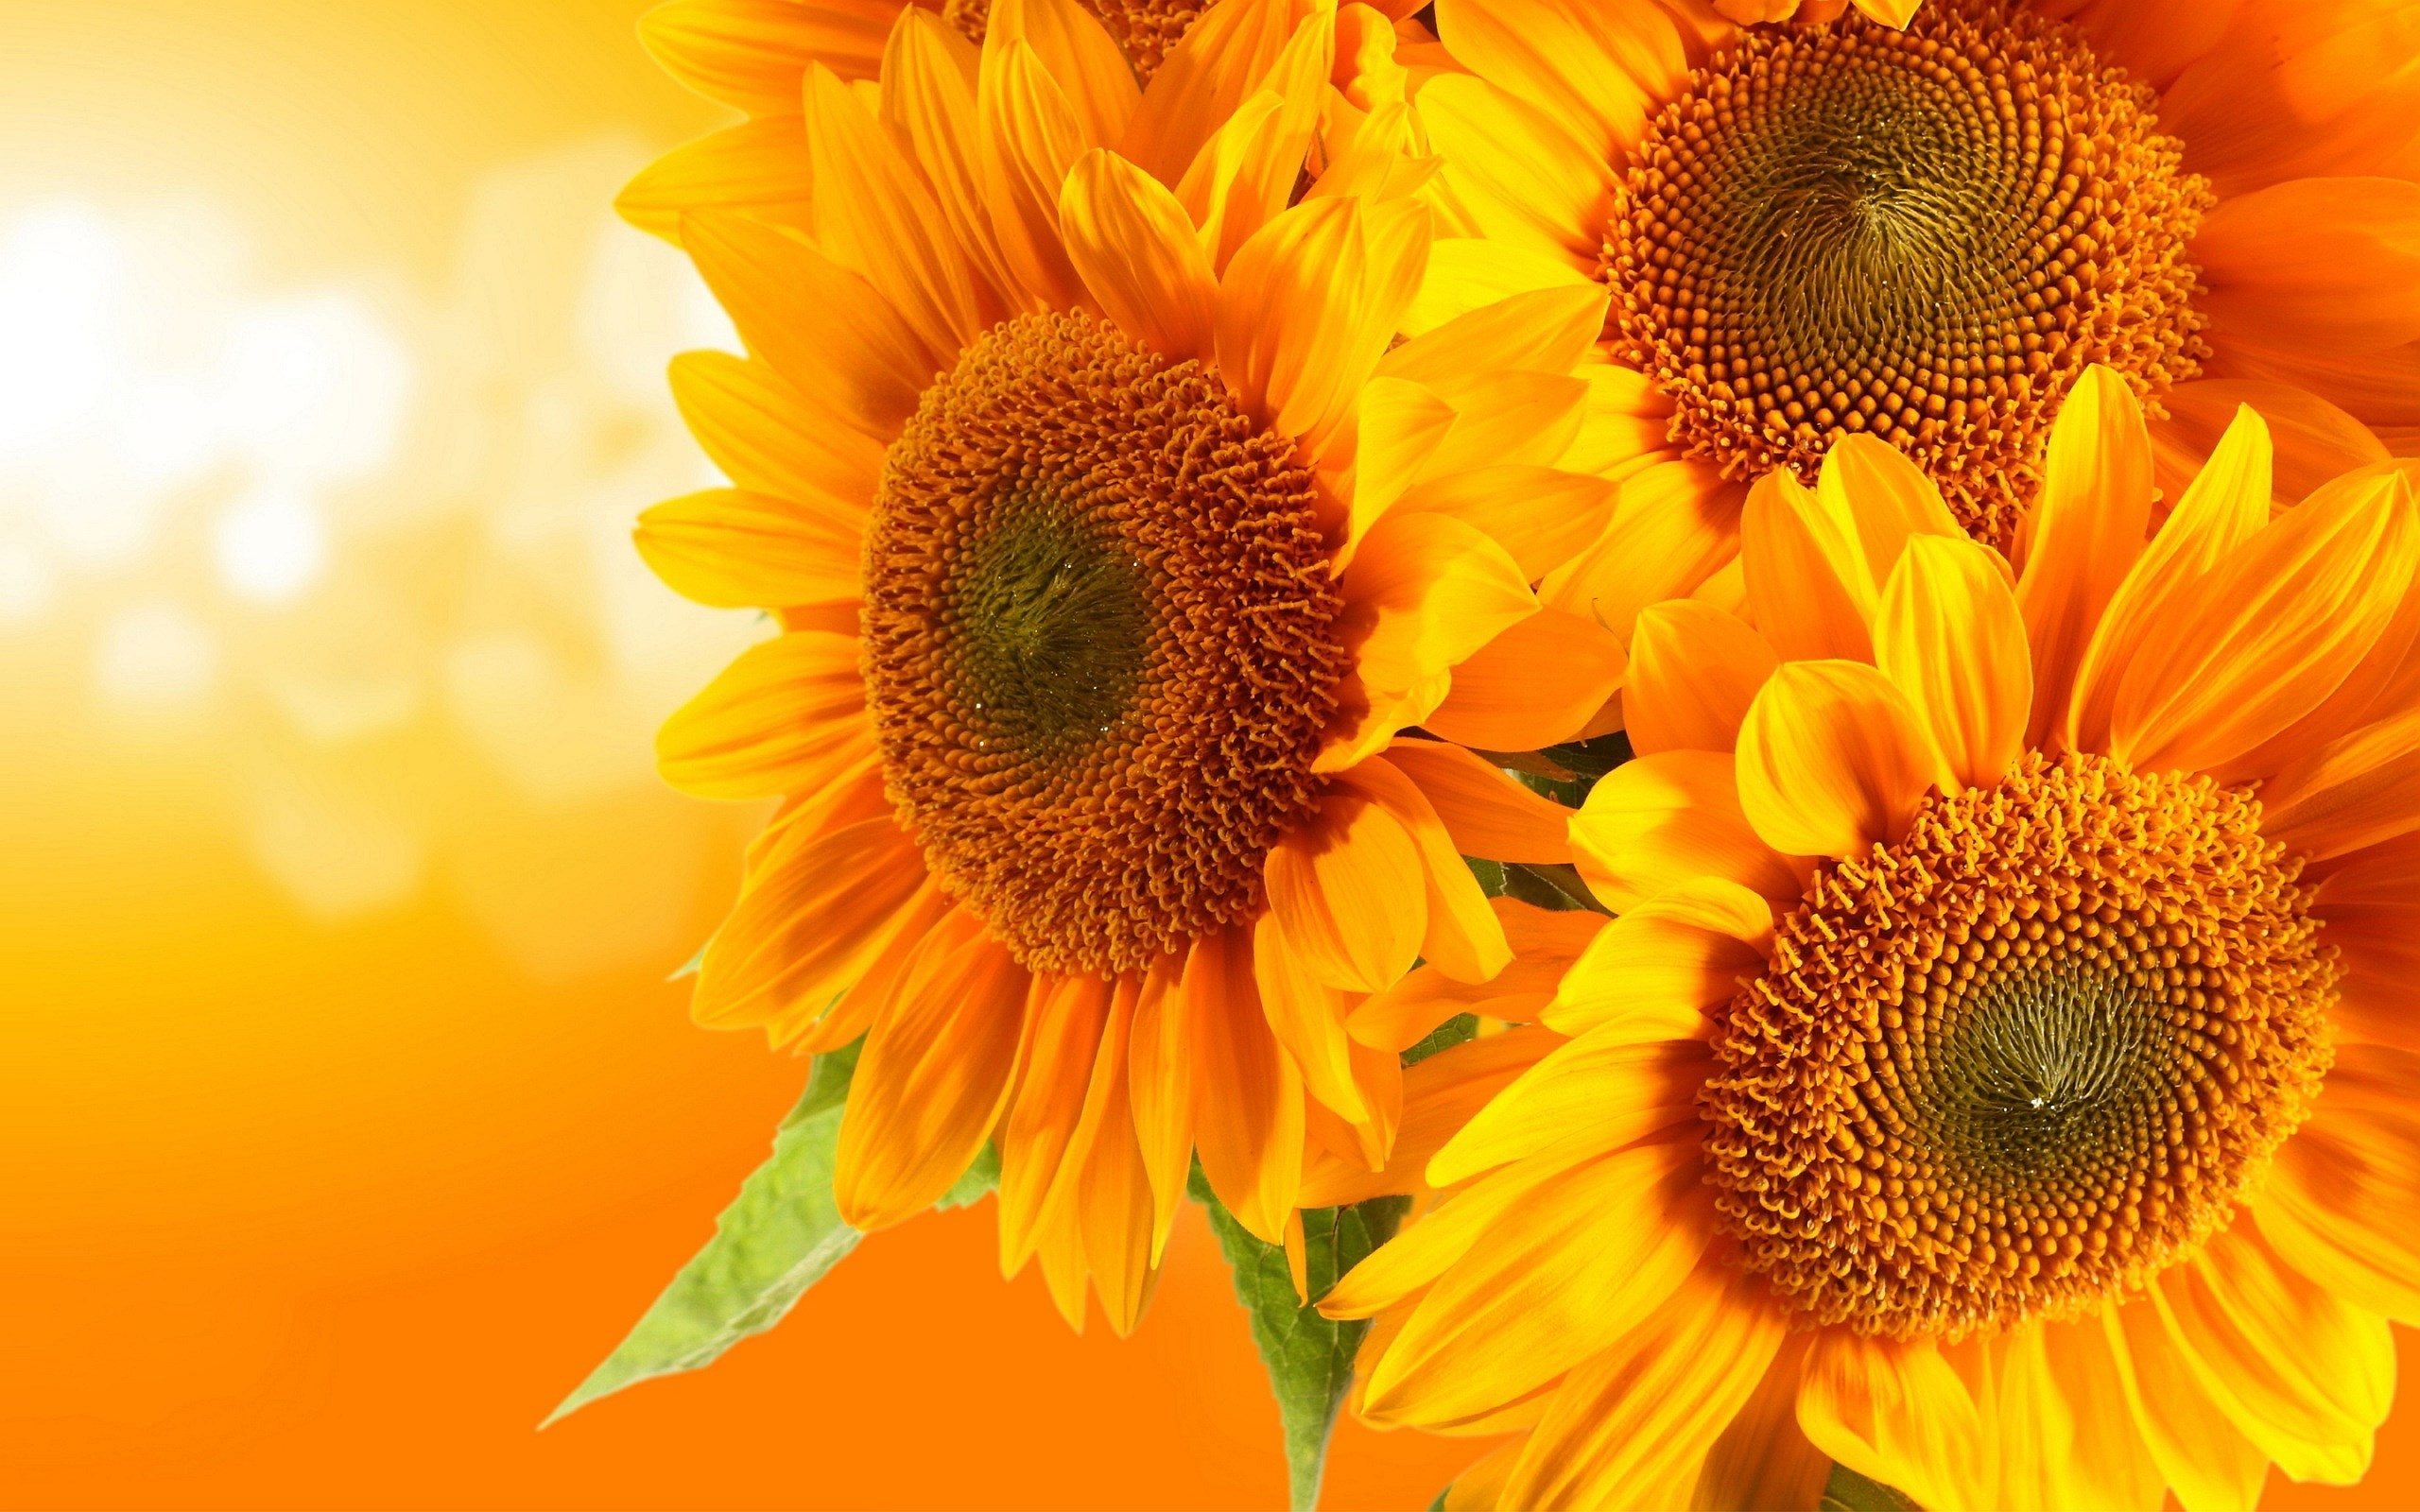 sunflower images for backgrounds desktop 1080P 2k 4k Full HD Wallpapers  Backgrounds Free Download  Wallpaper Crafter